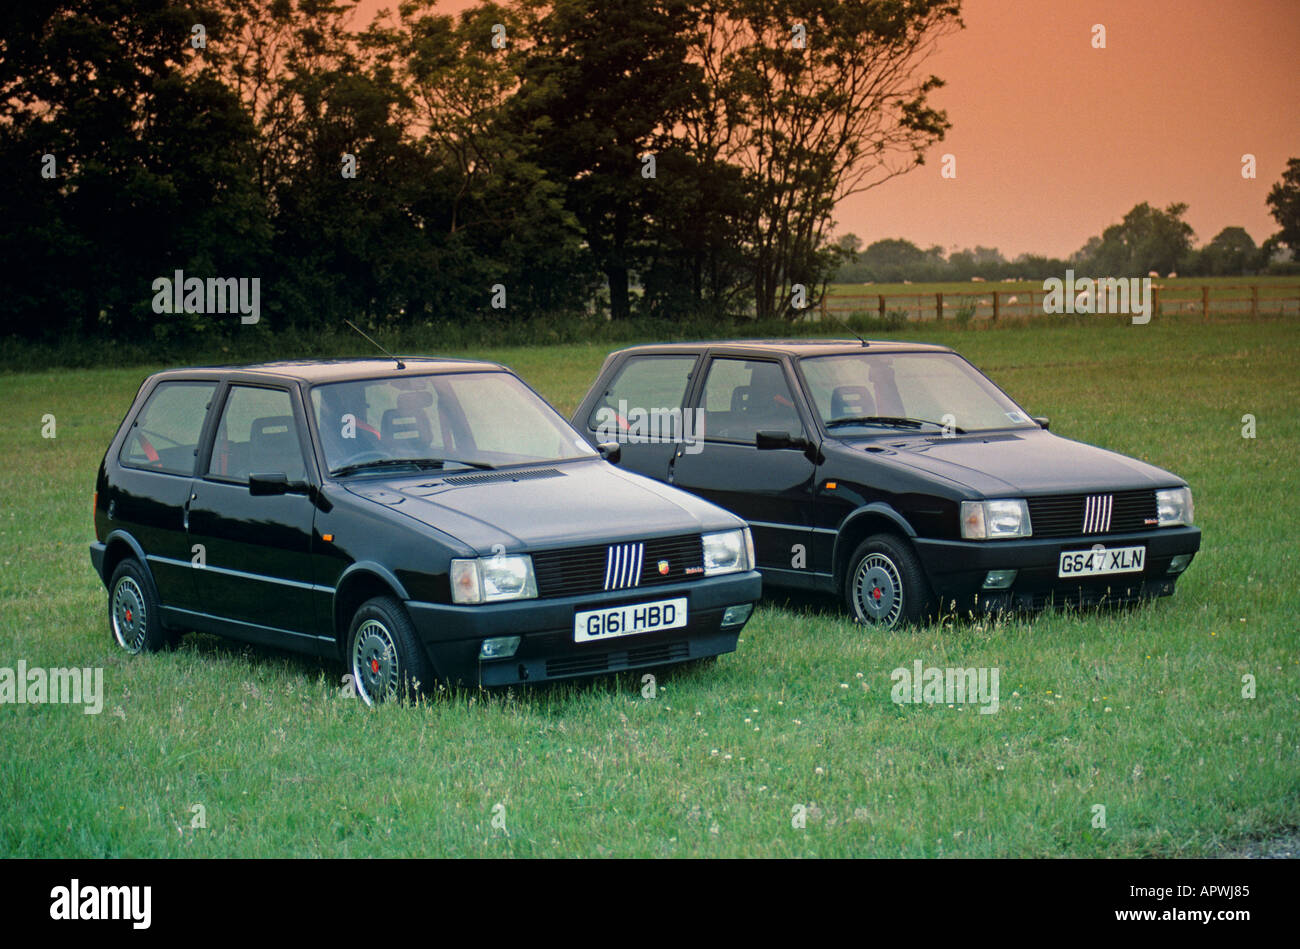 Fiat Uno Turbo ie. Turbo built 1985 to 1989. (Uno 1983 to 1989) Stock Photo